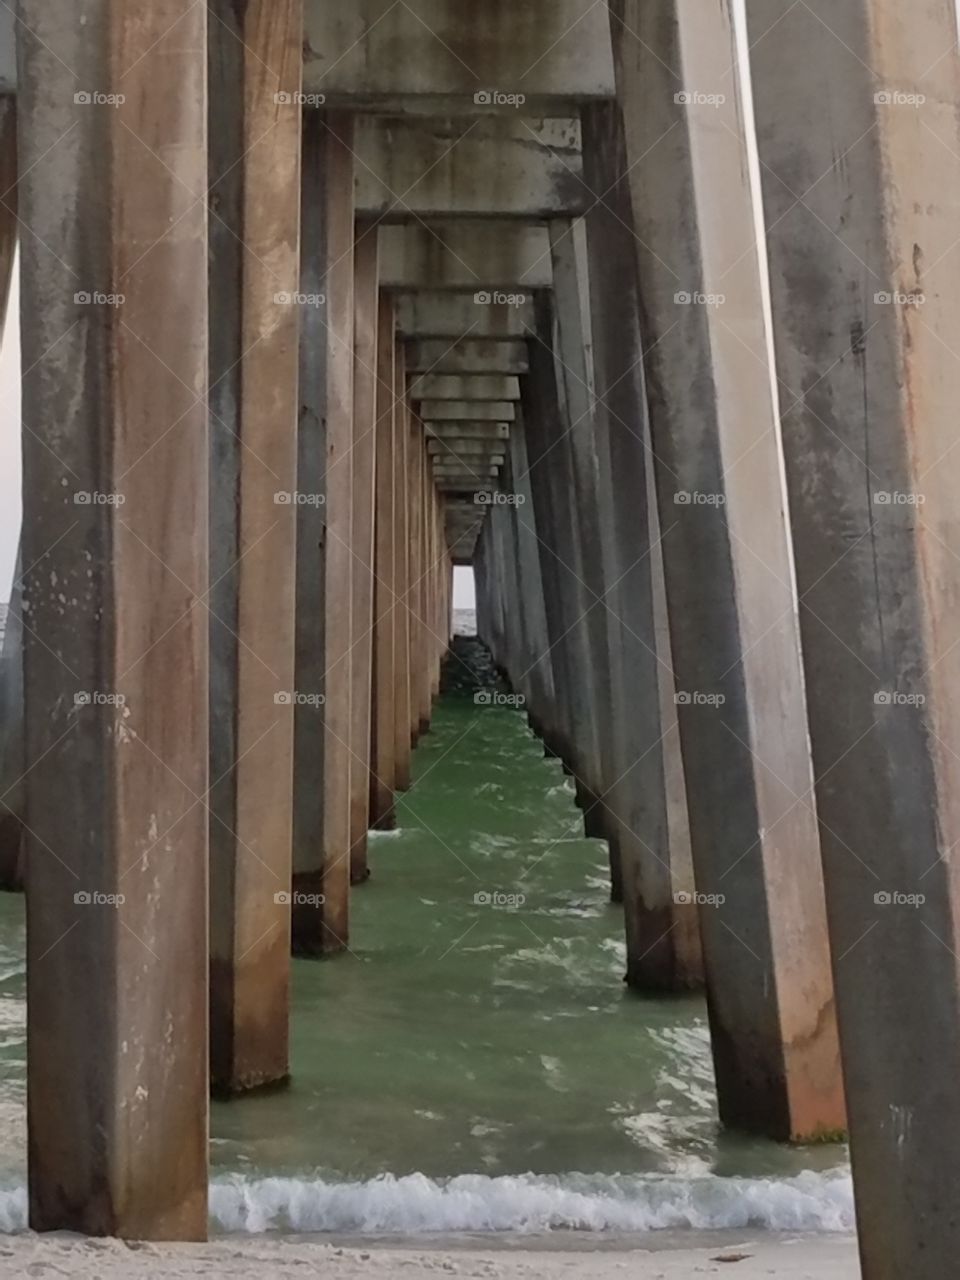 Bridge over troubled water